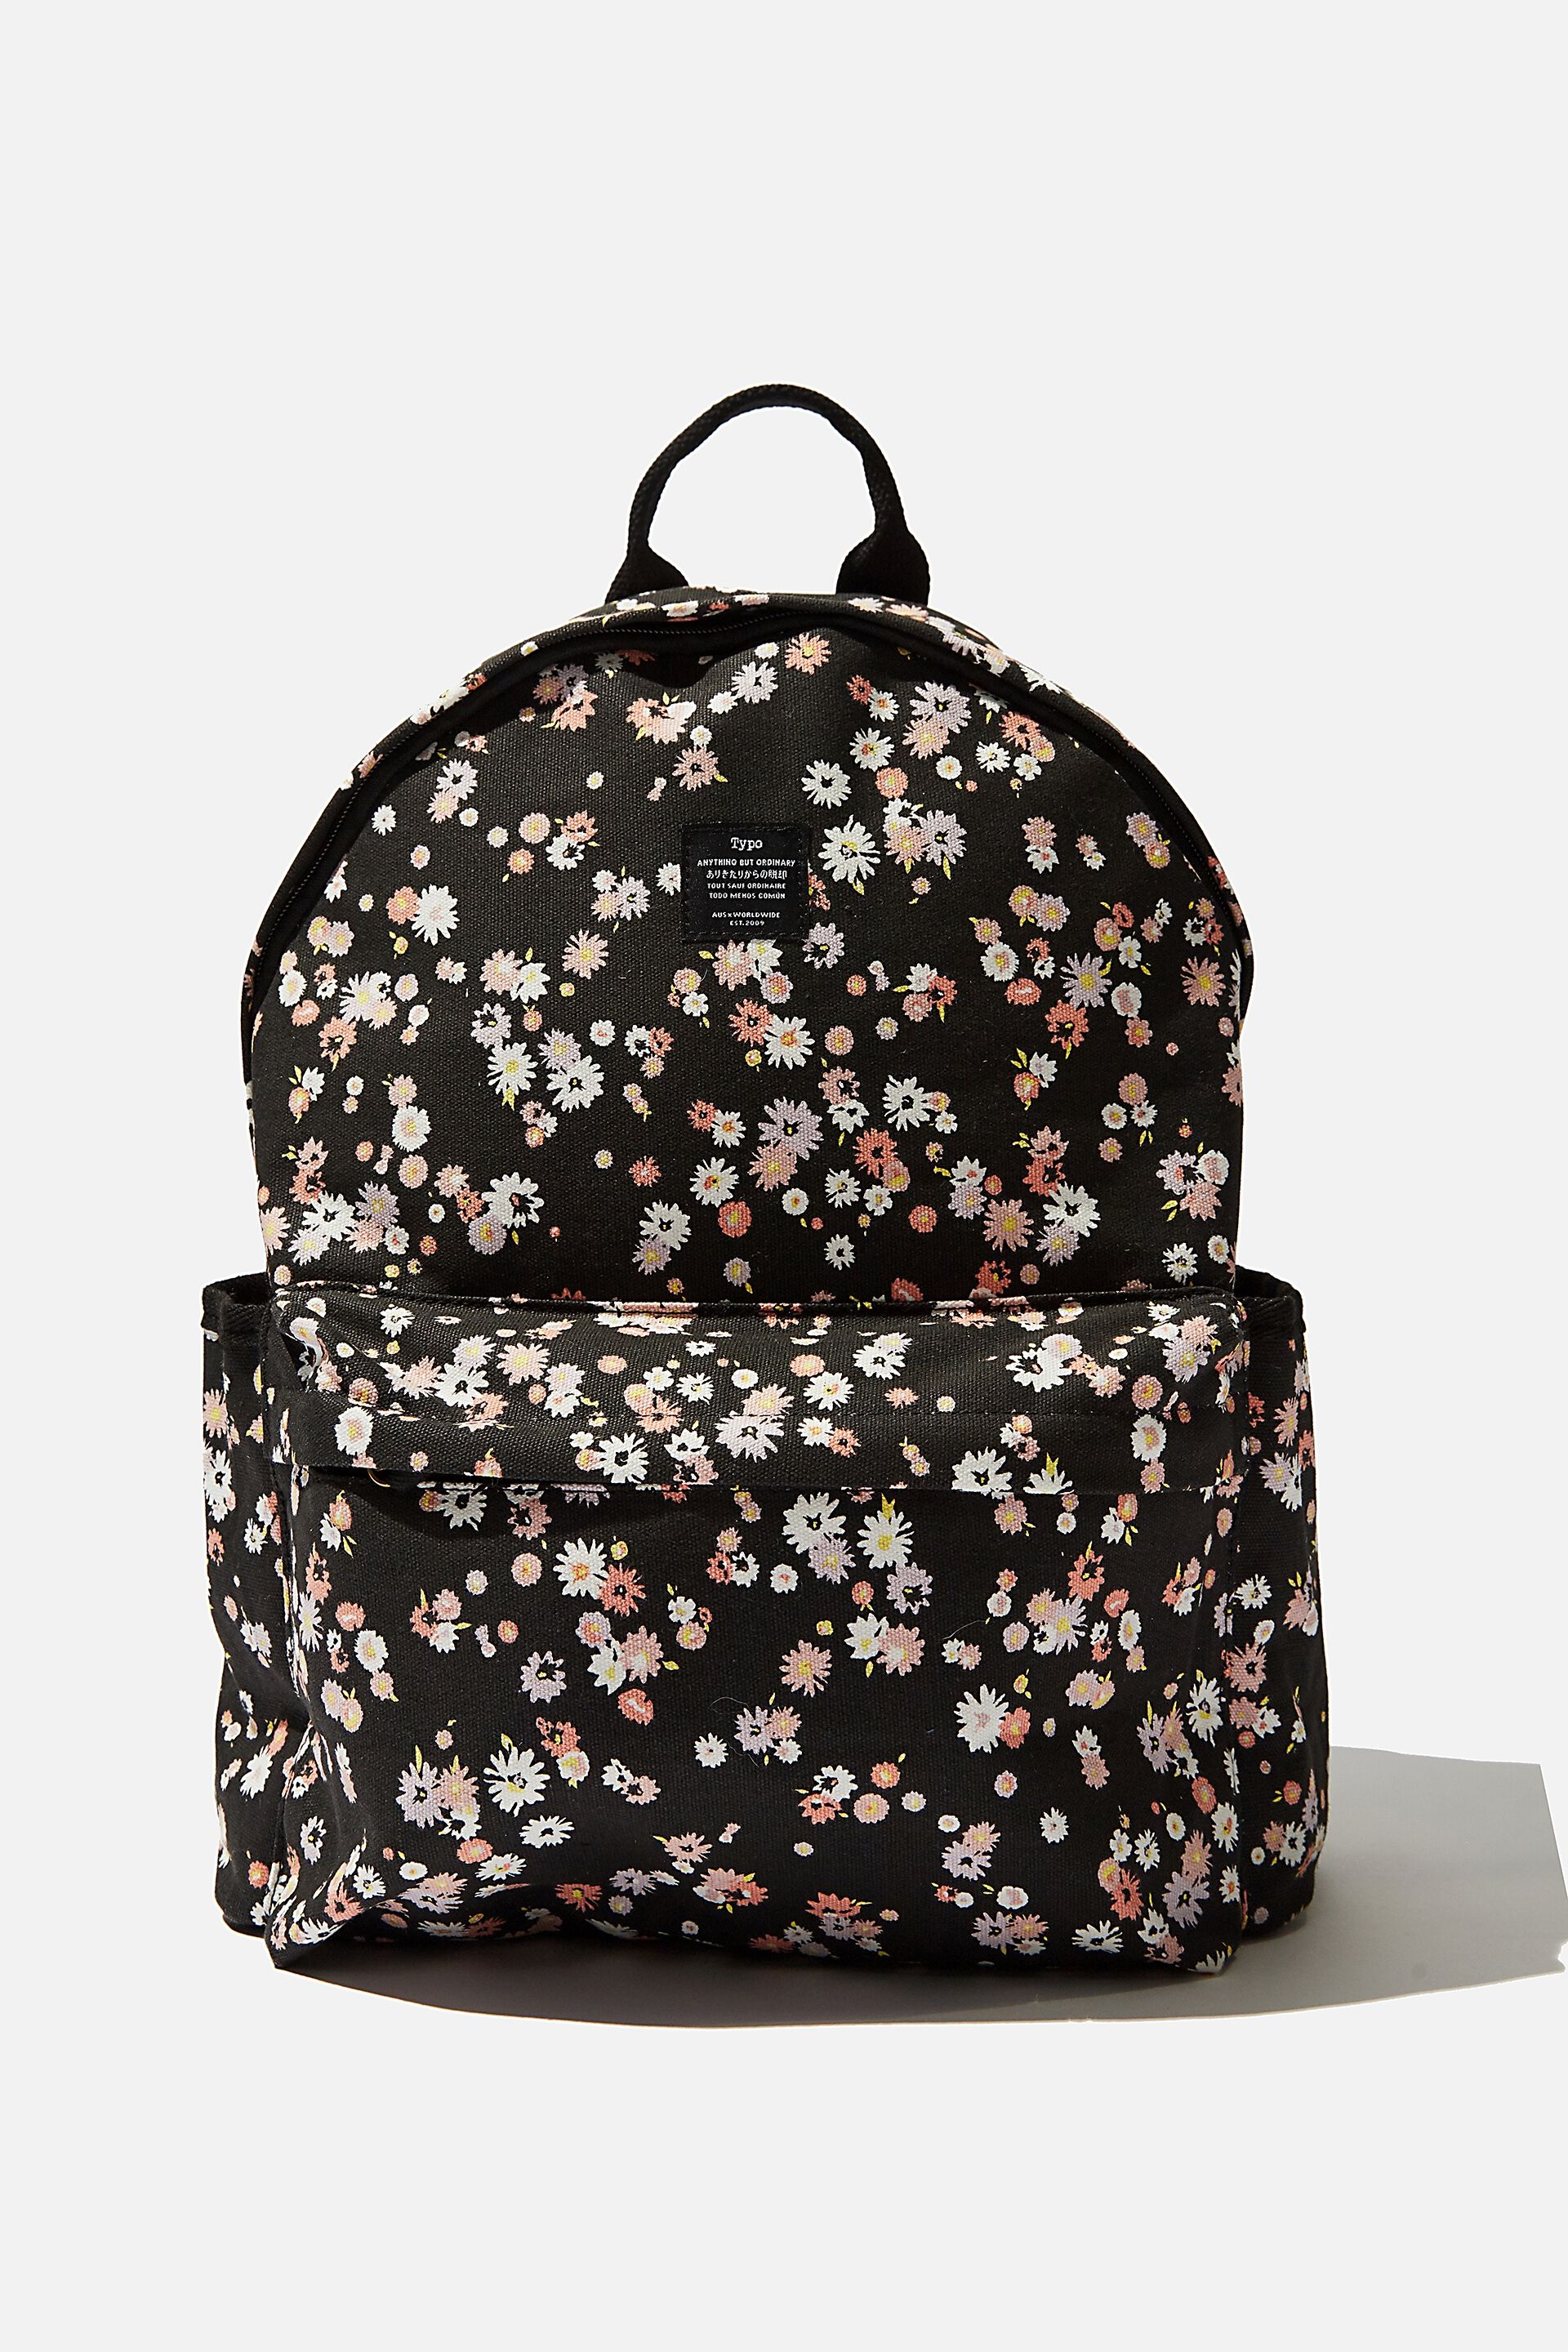 backpacks for under $30